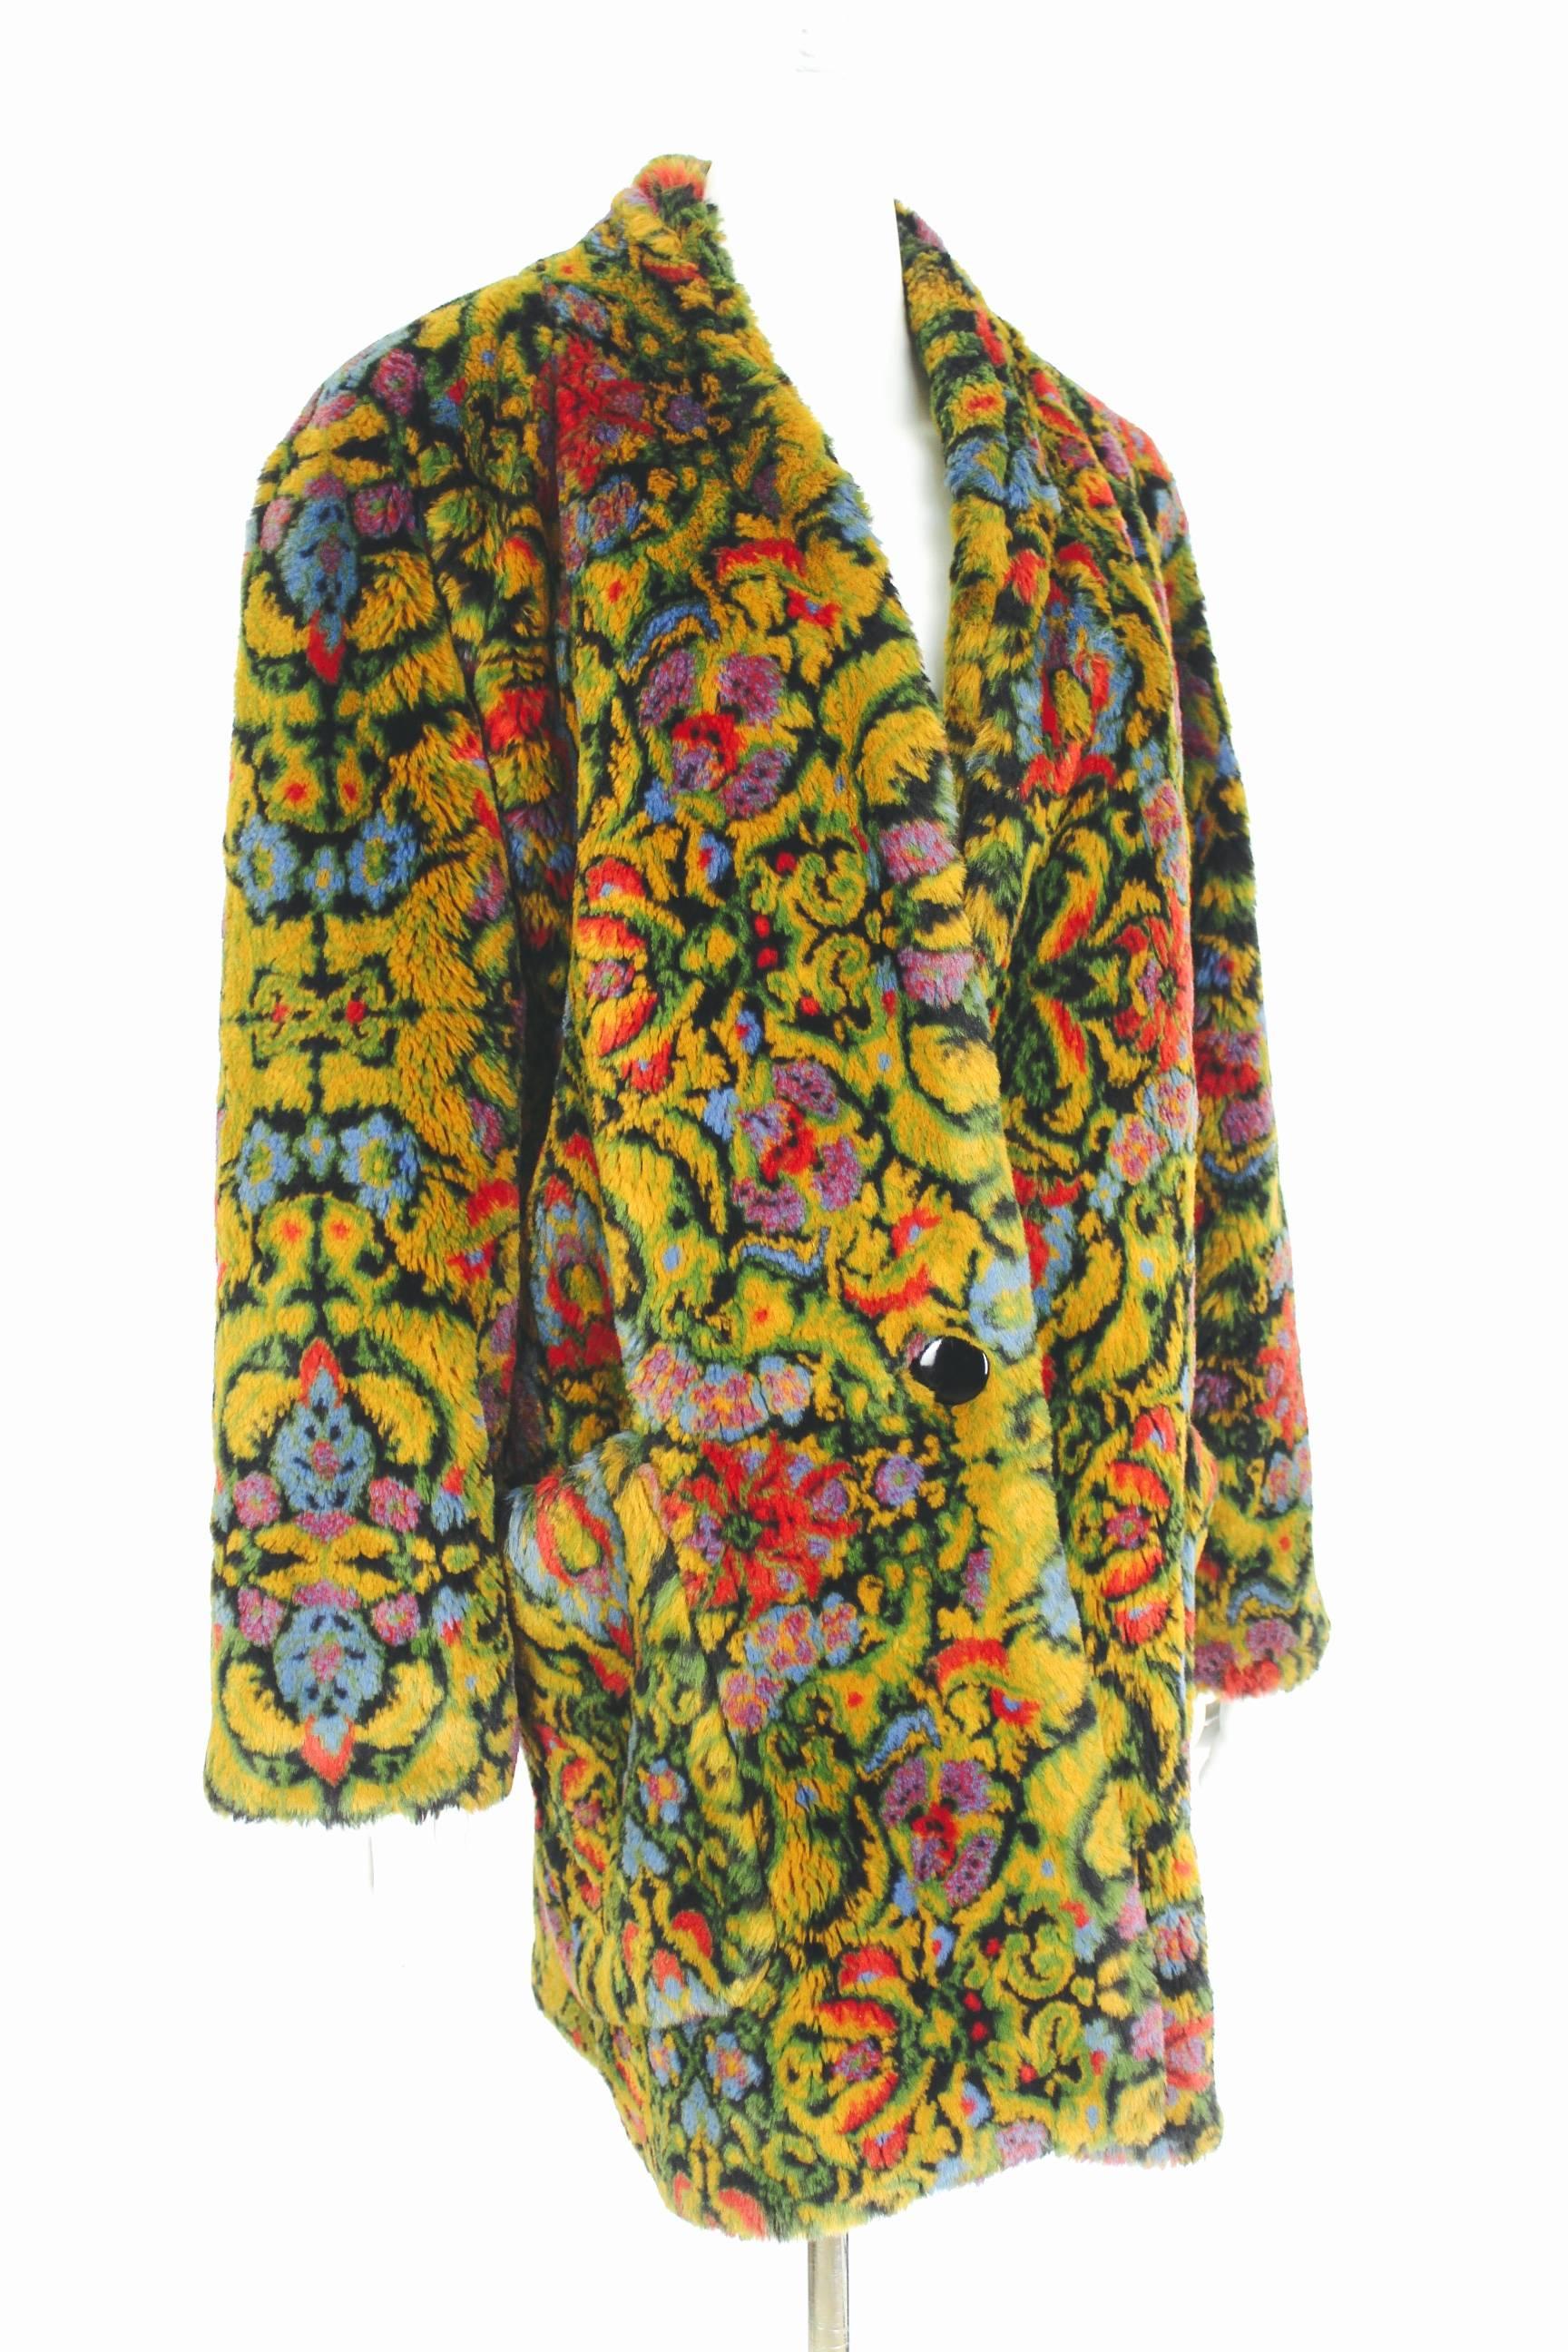 Guy Laroche Vintage Faux Fur Tapestry Design Coat
Labelled size 38